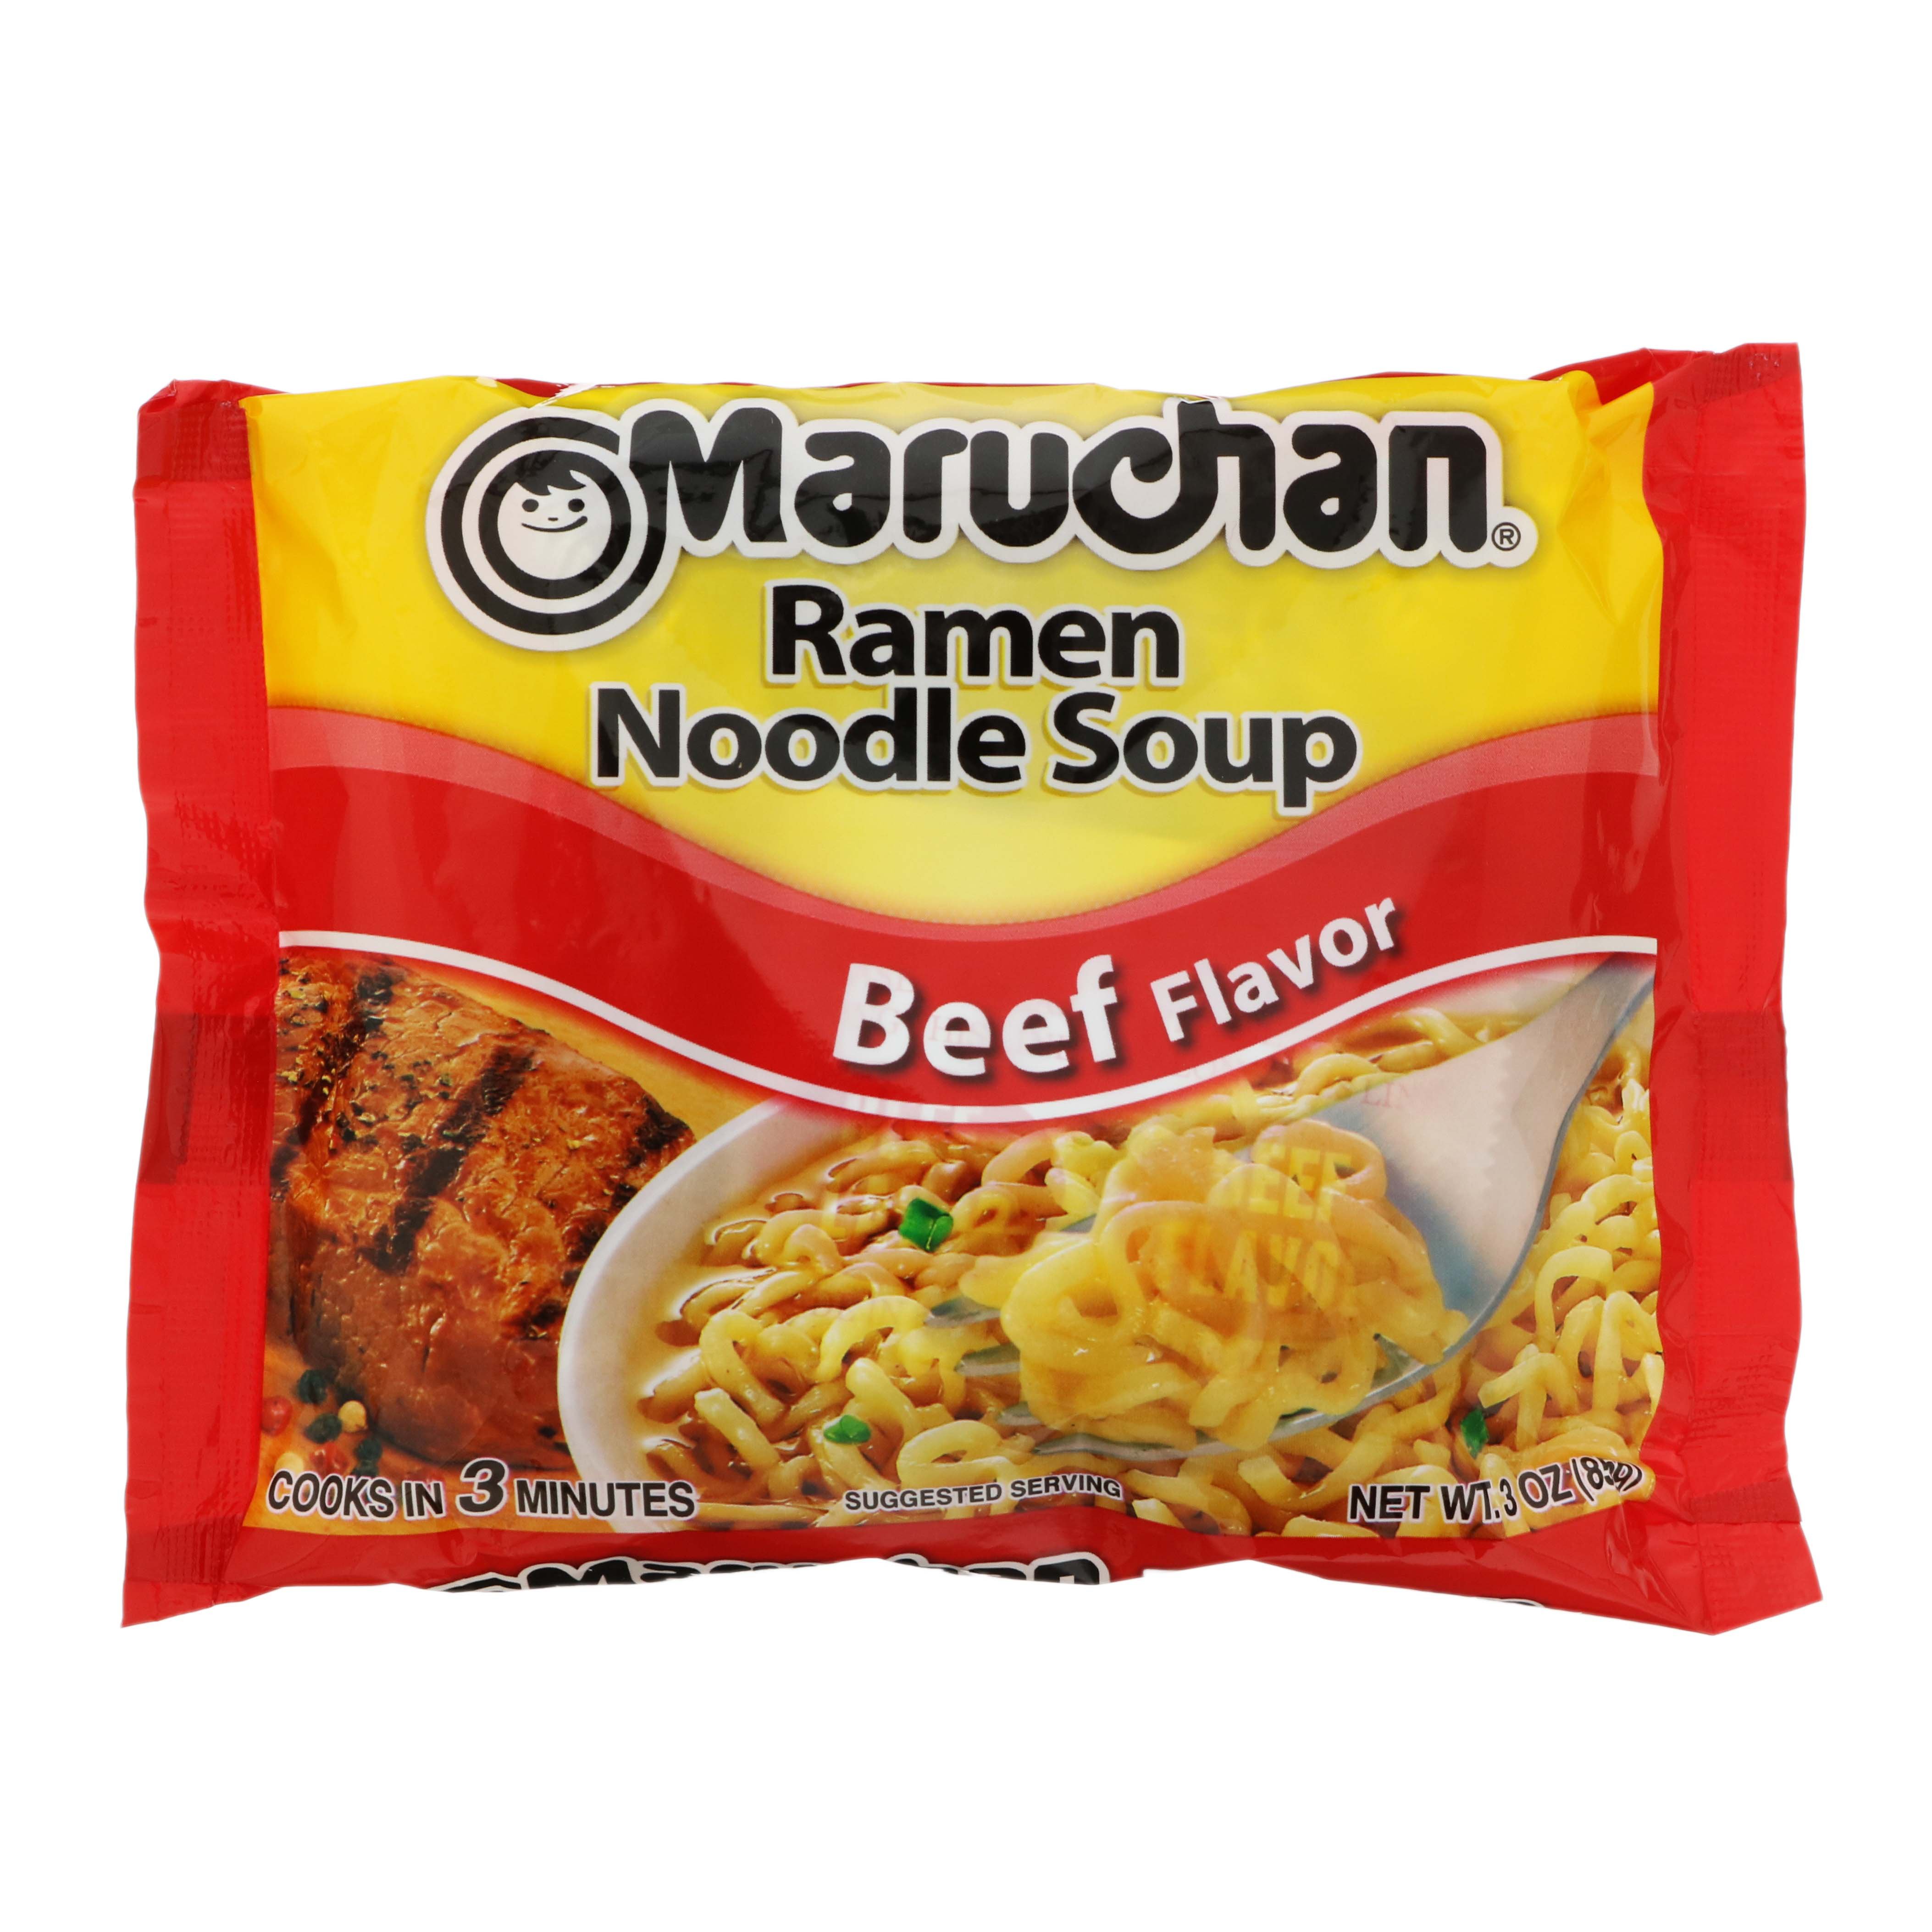 maruchan-ramen-noodles-recipes-deporecipe-co